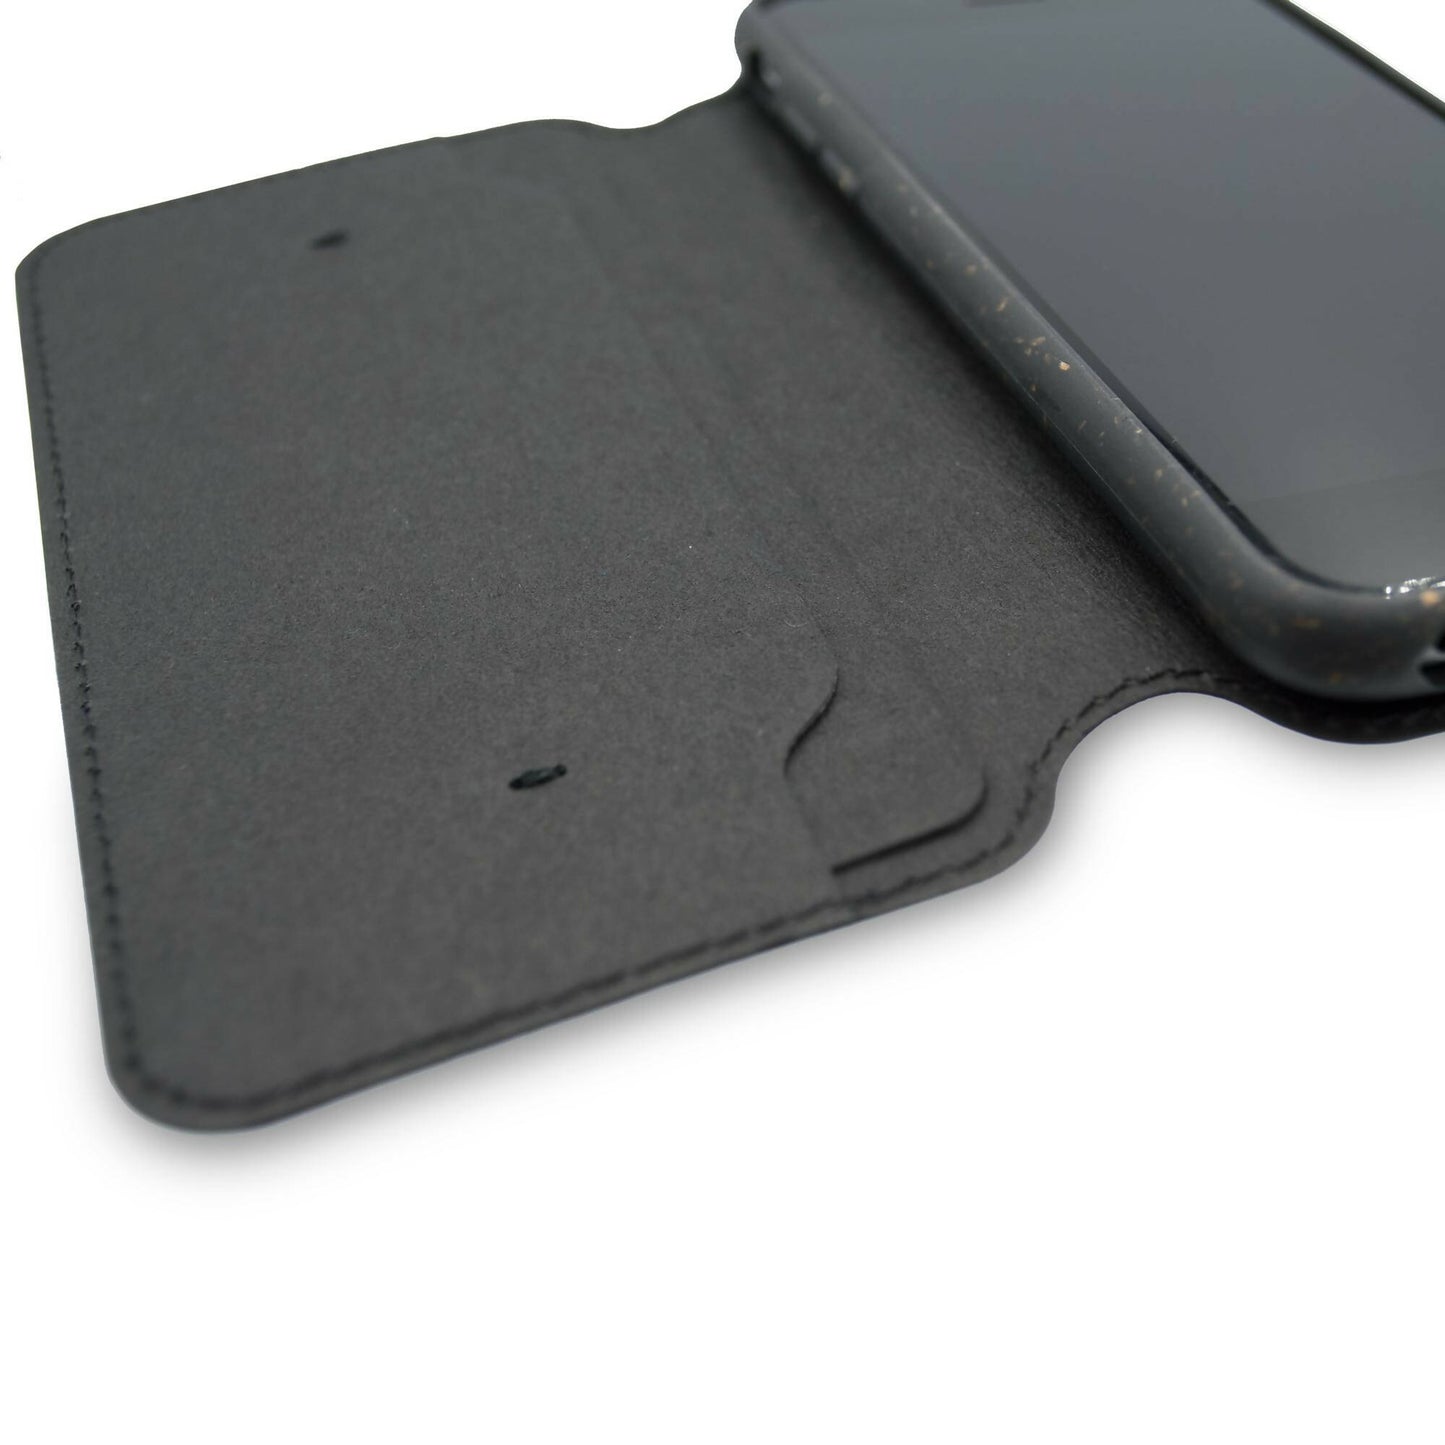 Biodegradable Flip Phone Case - Black